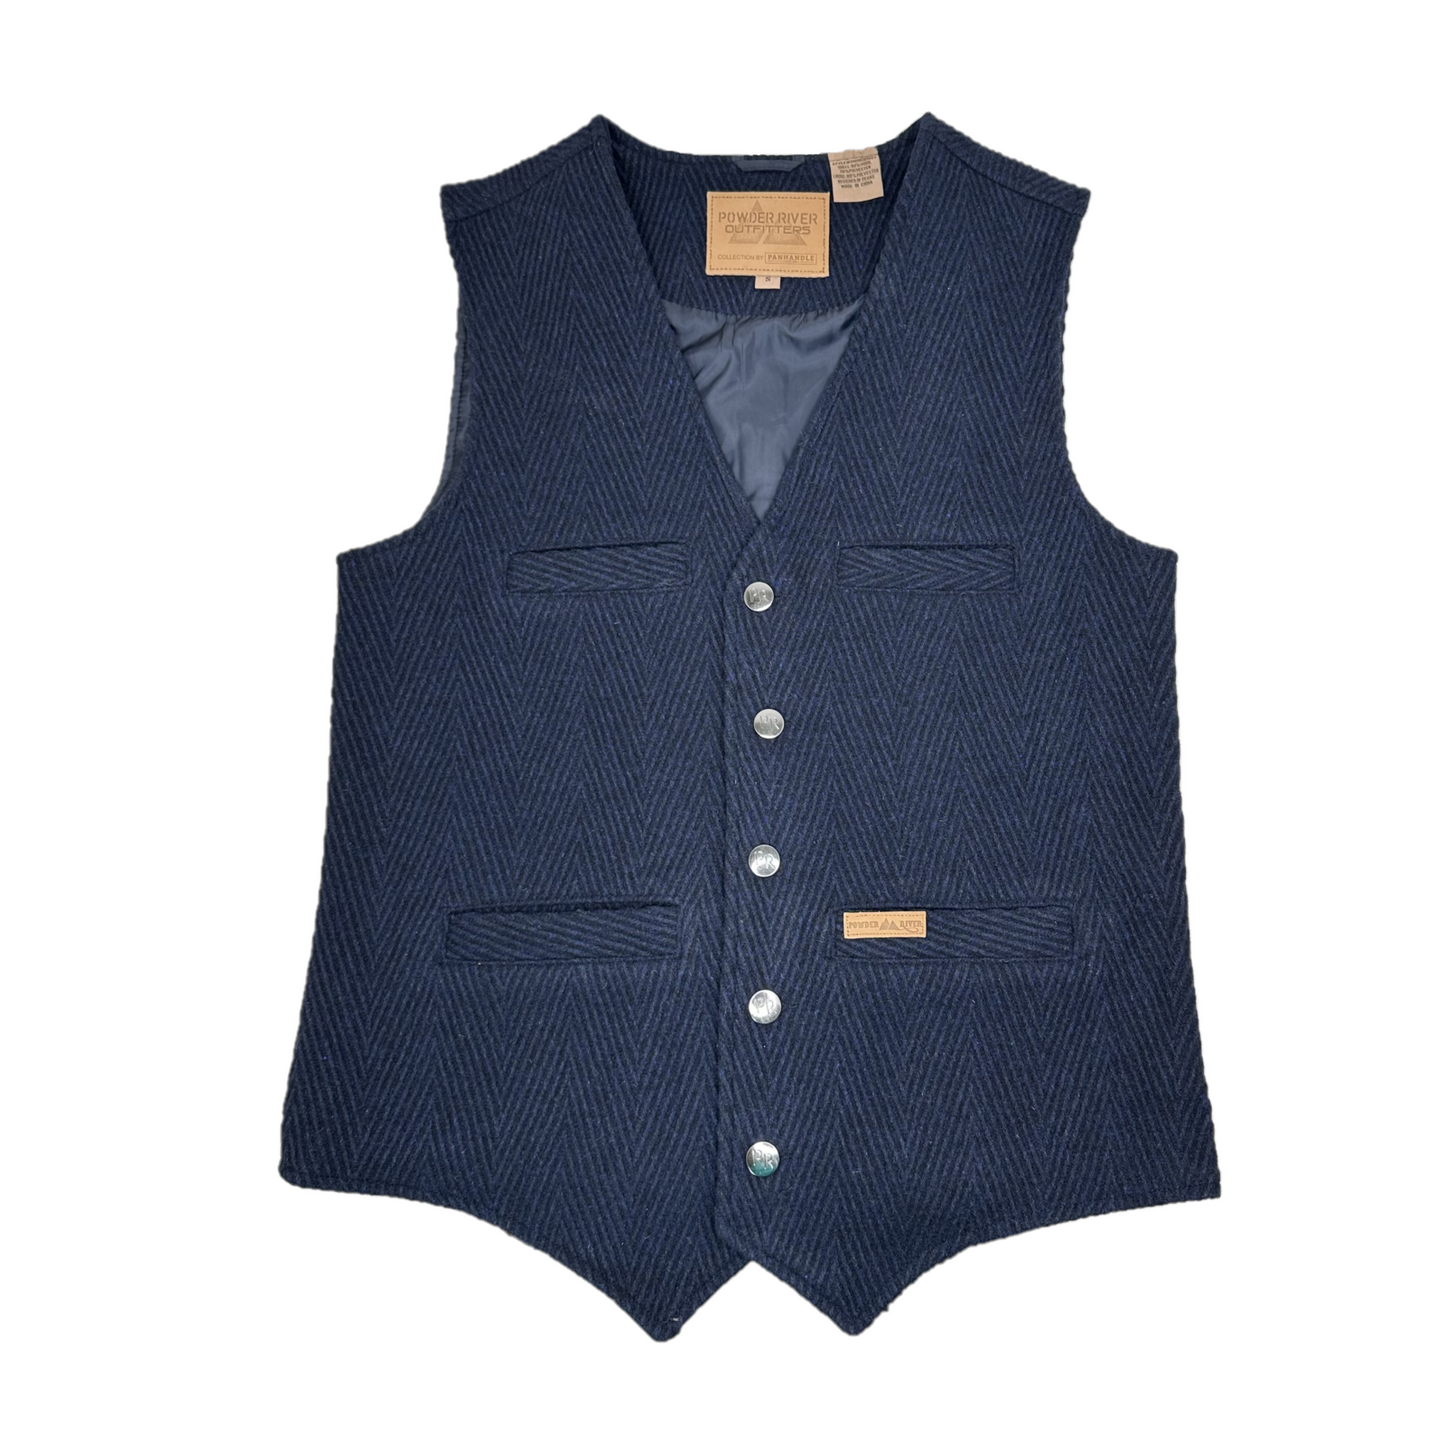 Powder River Outfitters Men's Chevron Nevada Wool Indigo Vest DM98C01467